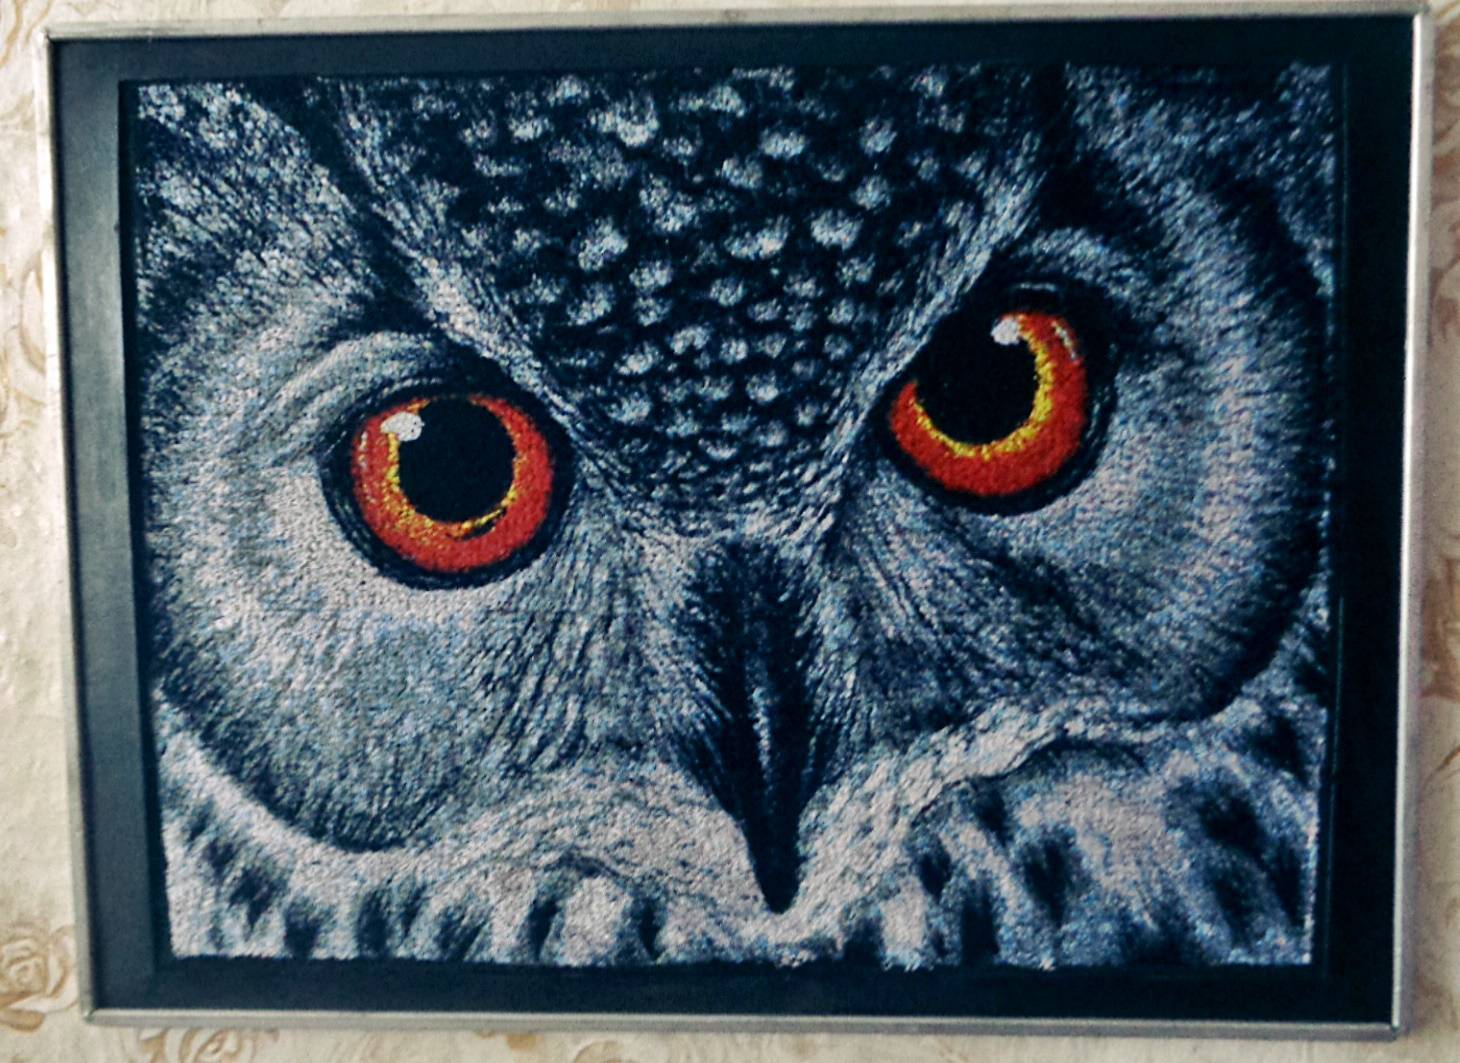  Owl  photo stitch free embroidery  design  Photo stitch 